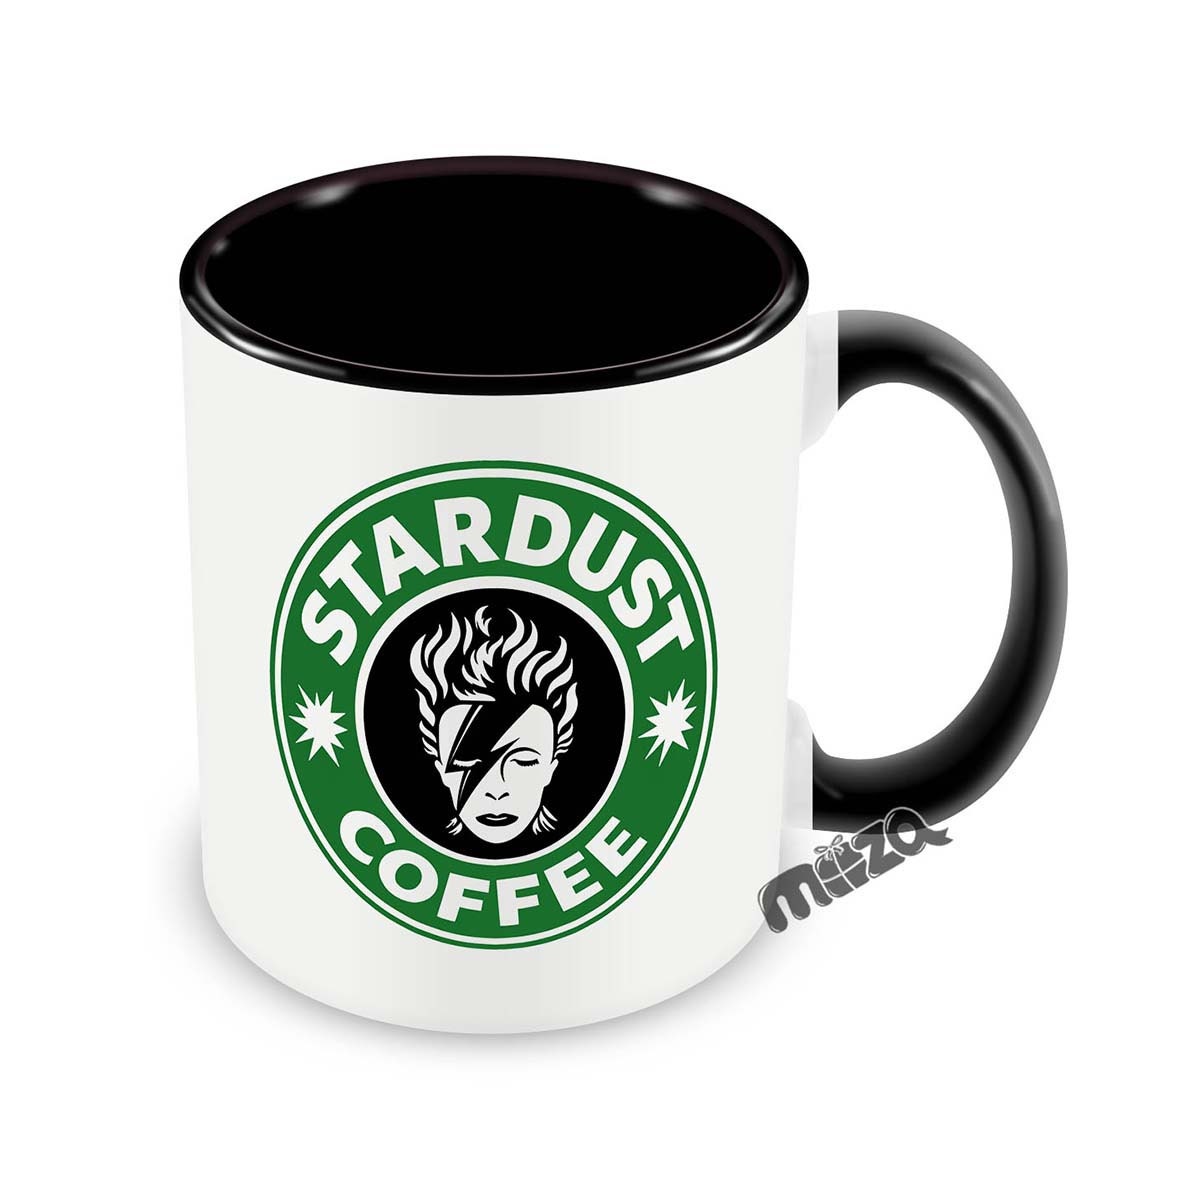 stardust coffee